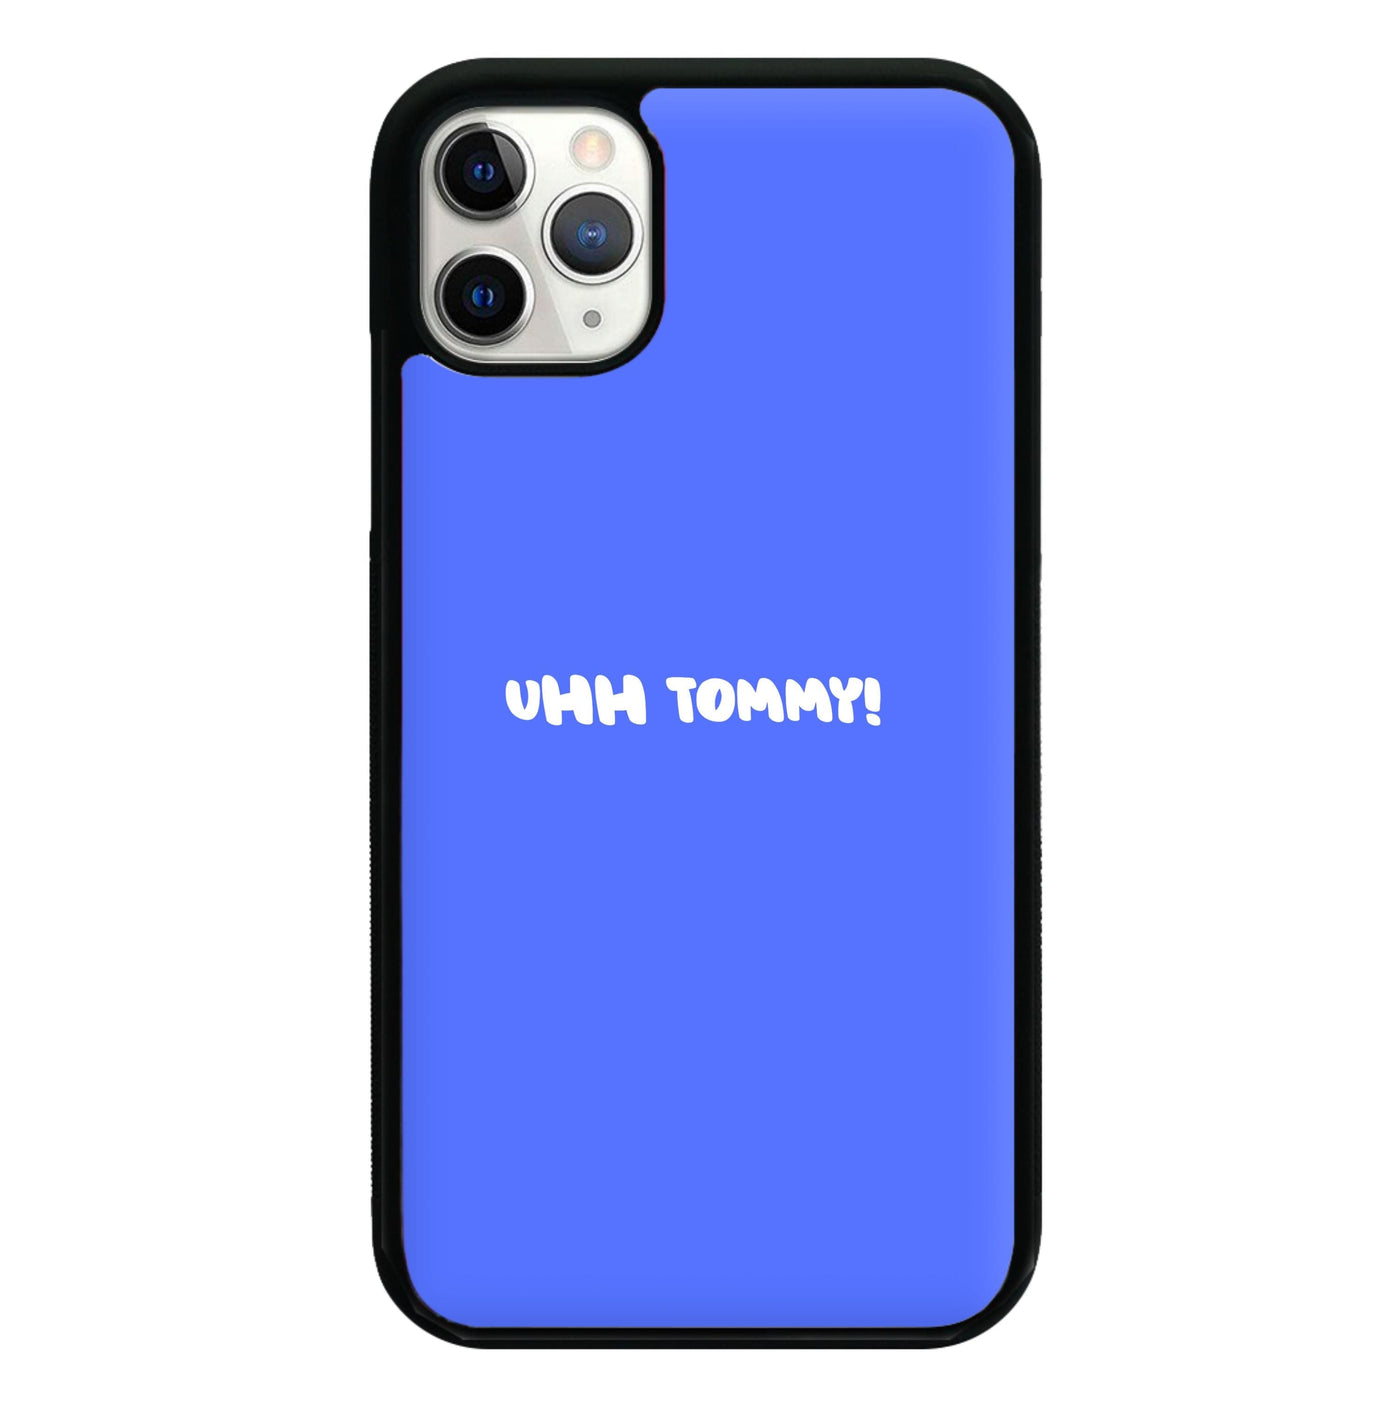 Uhh Tommy! - Islanders Phone Case